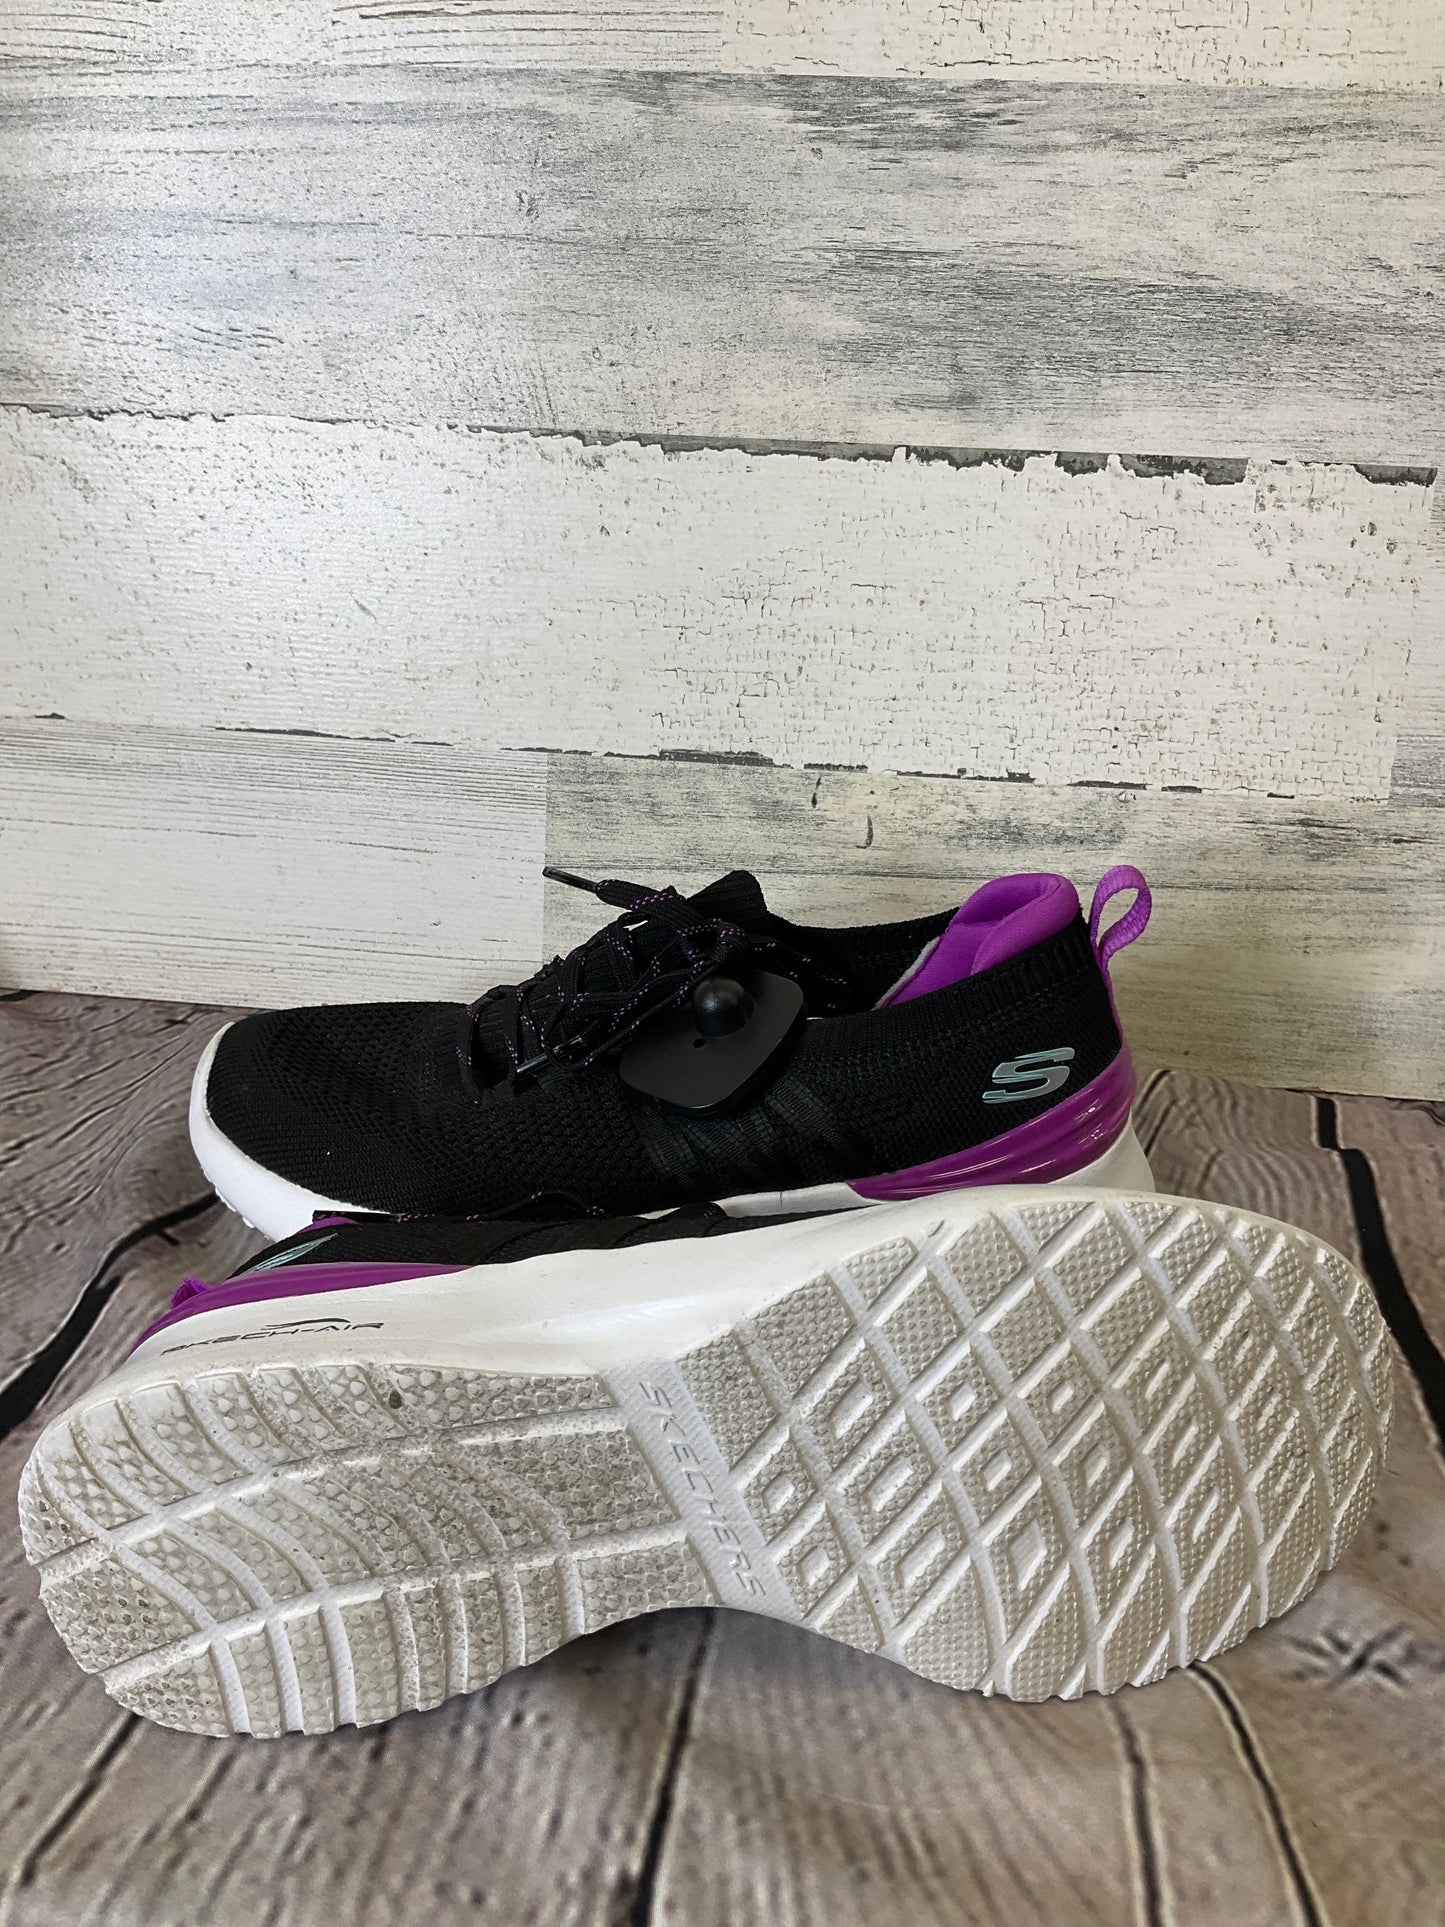 Black Shoes Athletic Skechers, Size 7.5